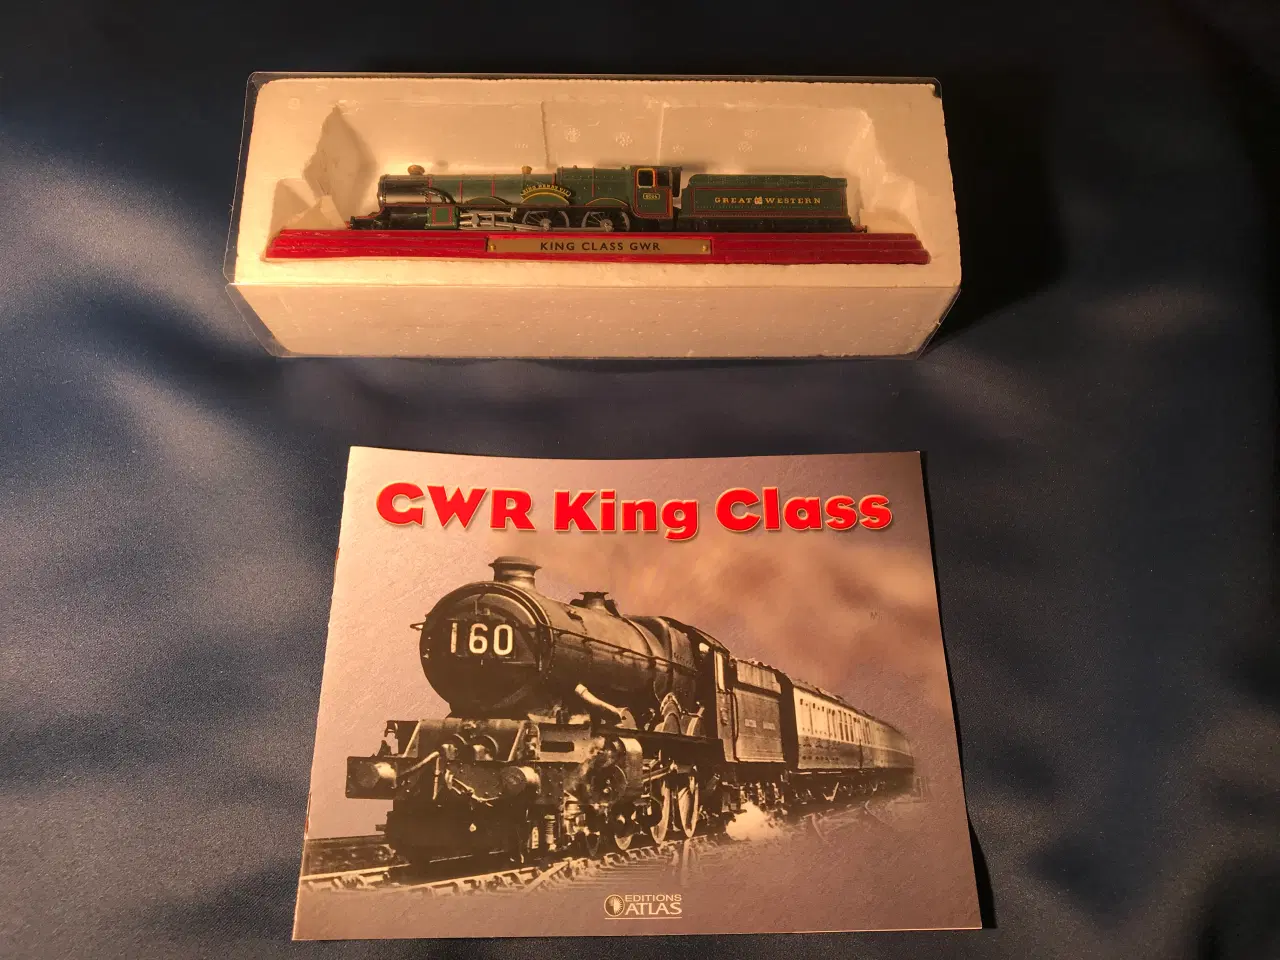 Billede 1 - Modeltog, Atlas King Class GWR, skala 1:100